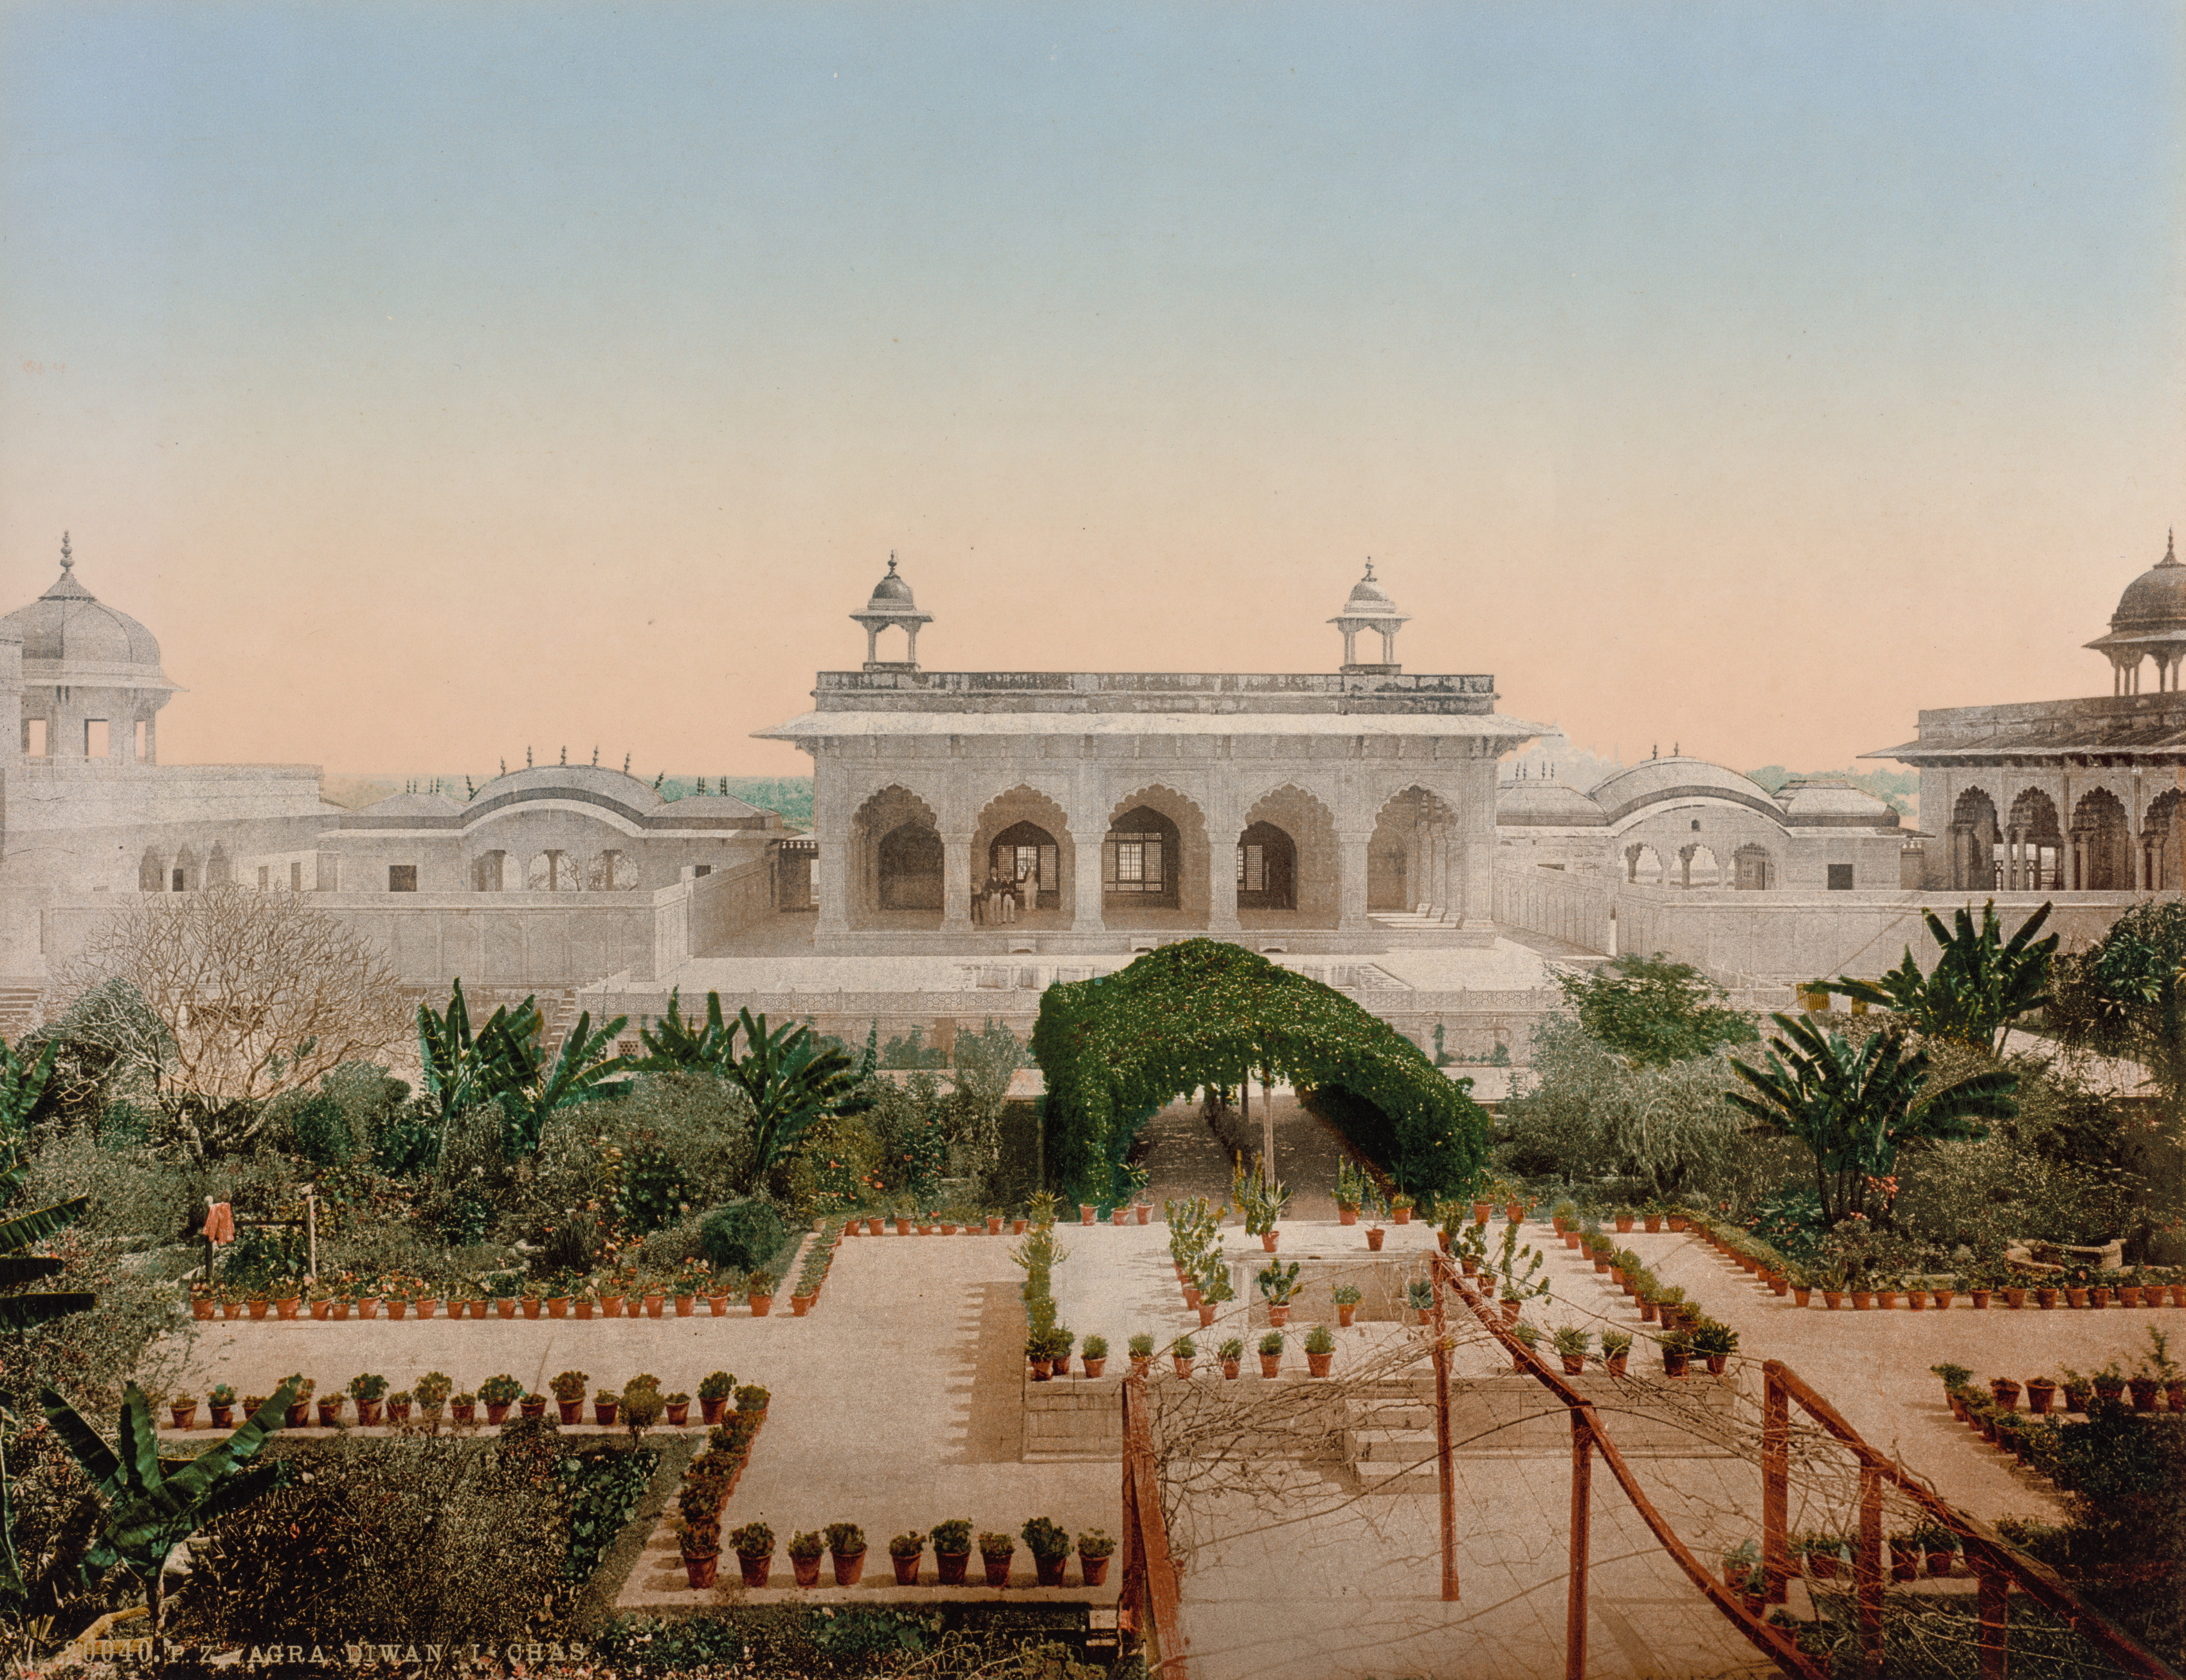 Agra. Diwan-i-Chas